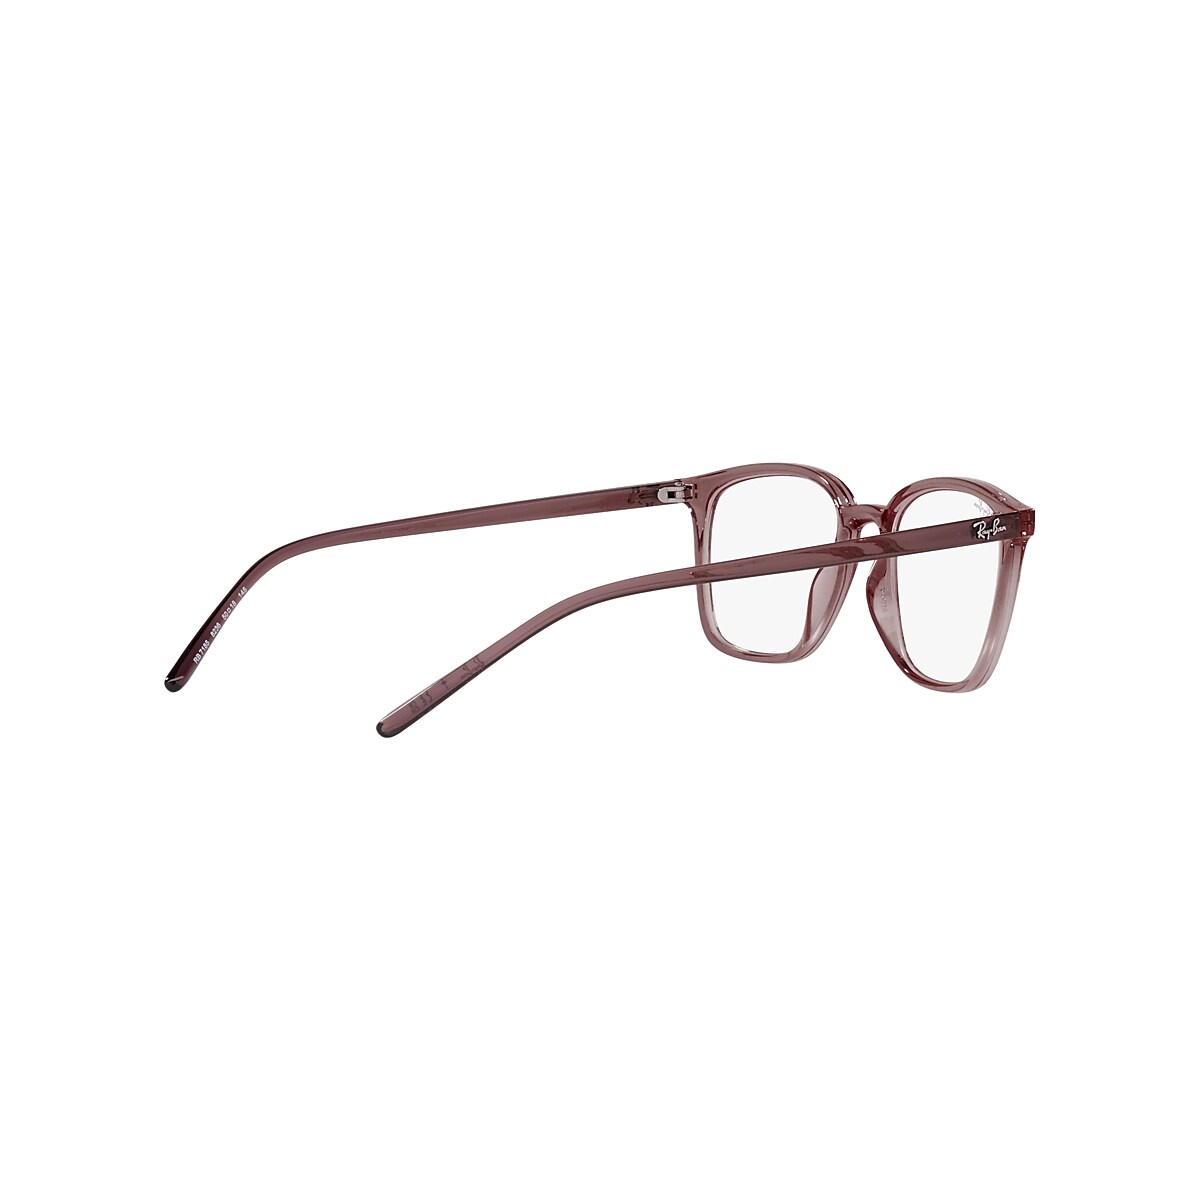 RB7185 OPTICS Eyeglasses with Transparent Brown Frame - RB7185F 